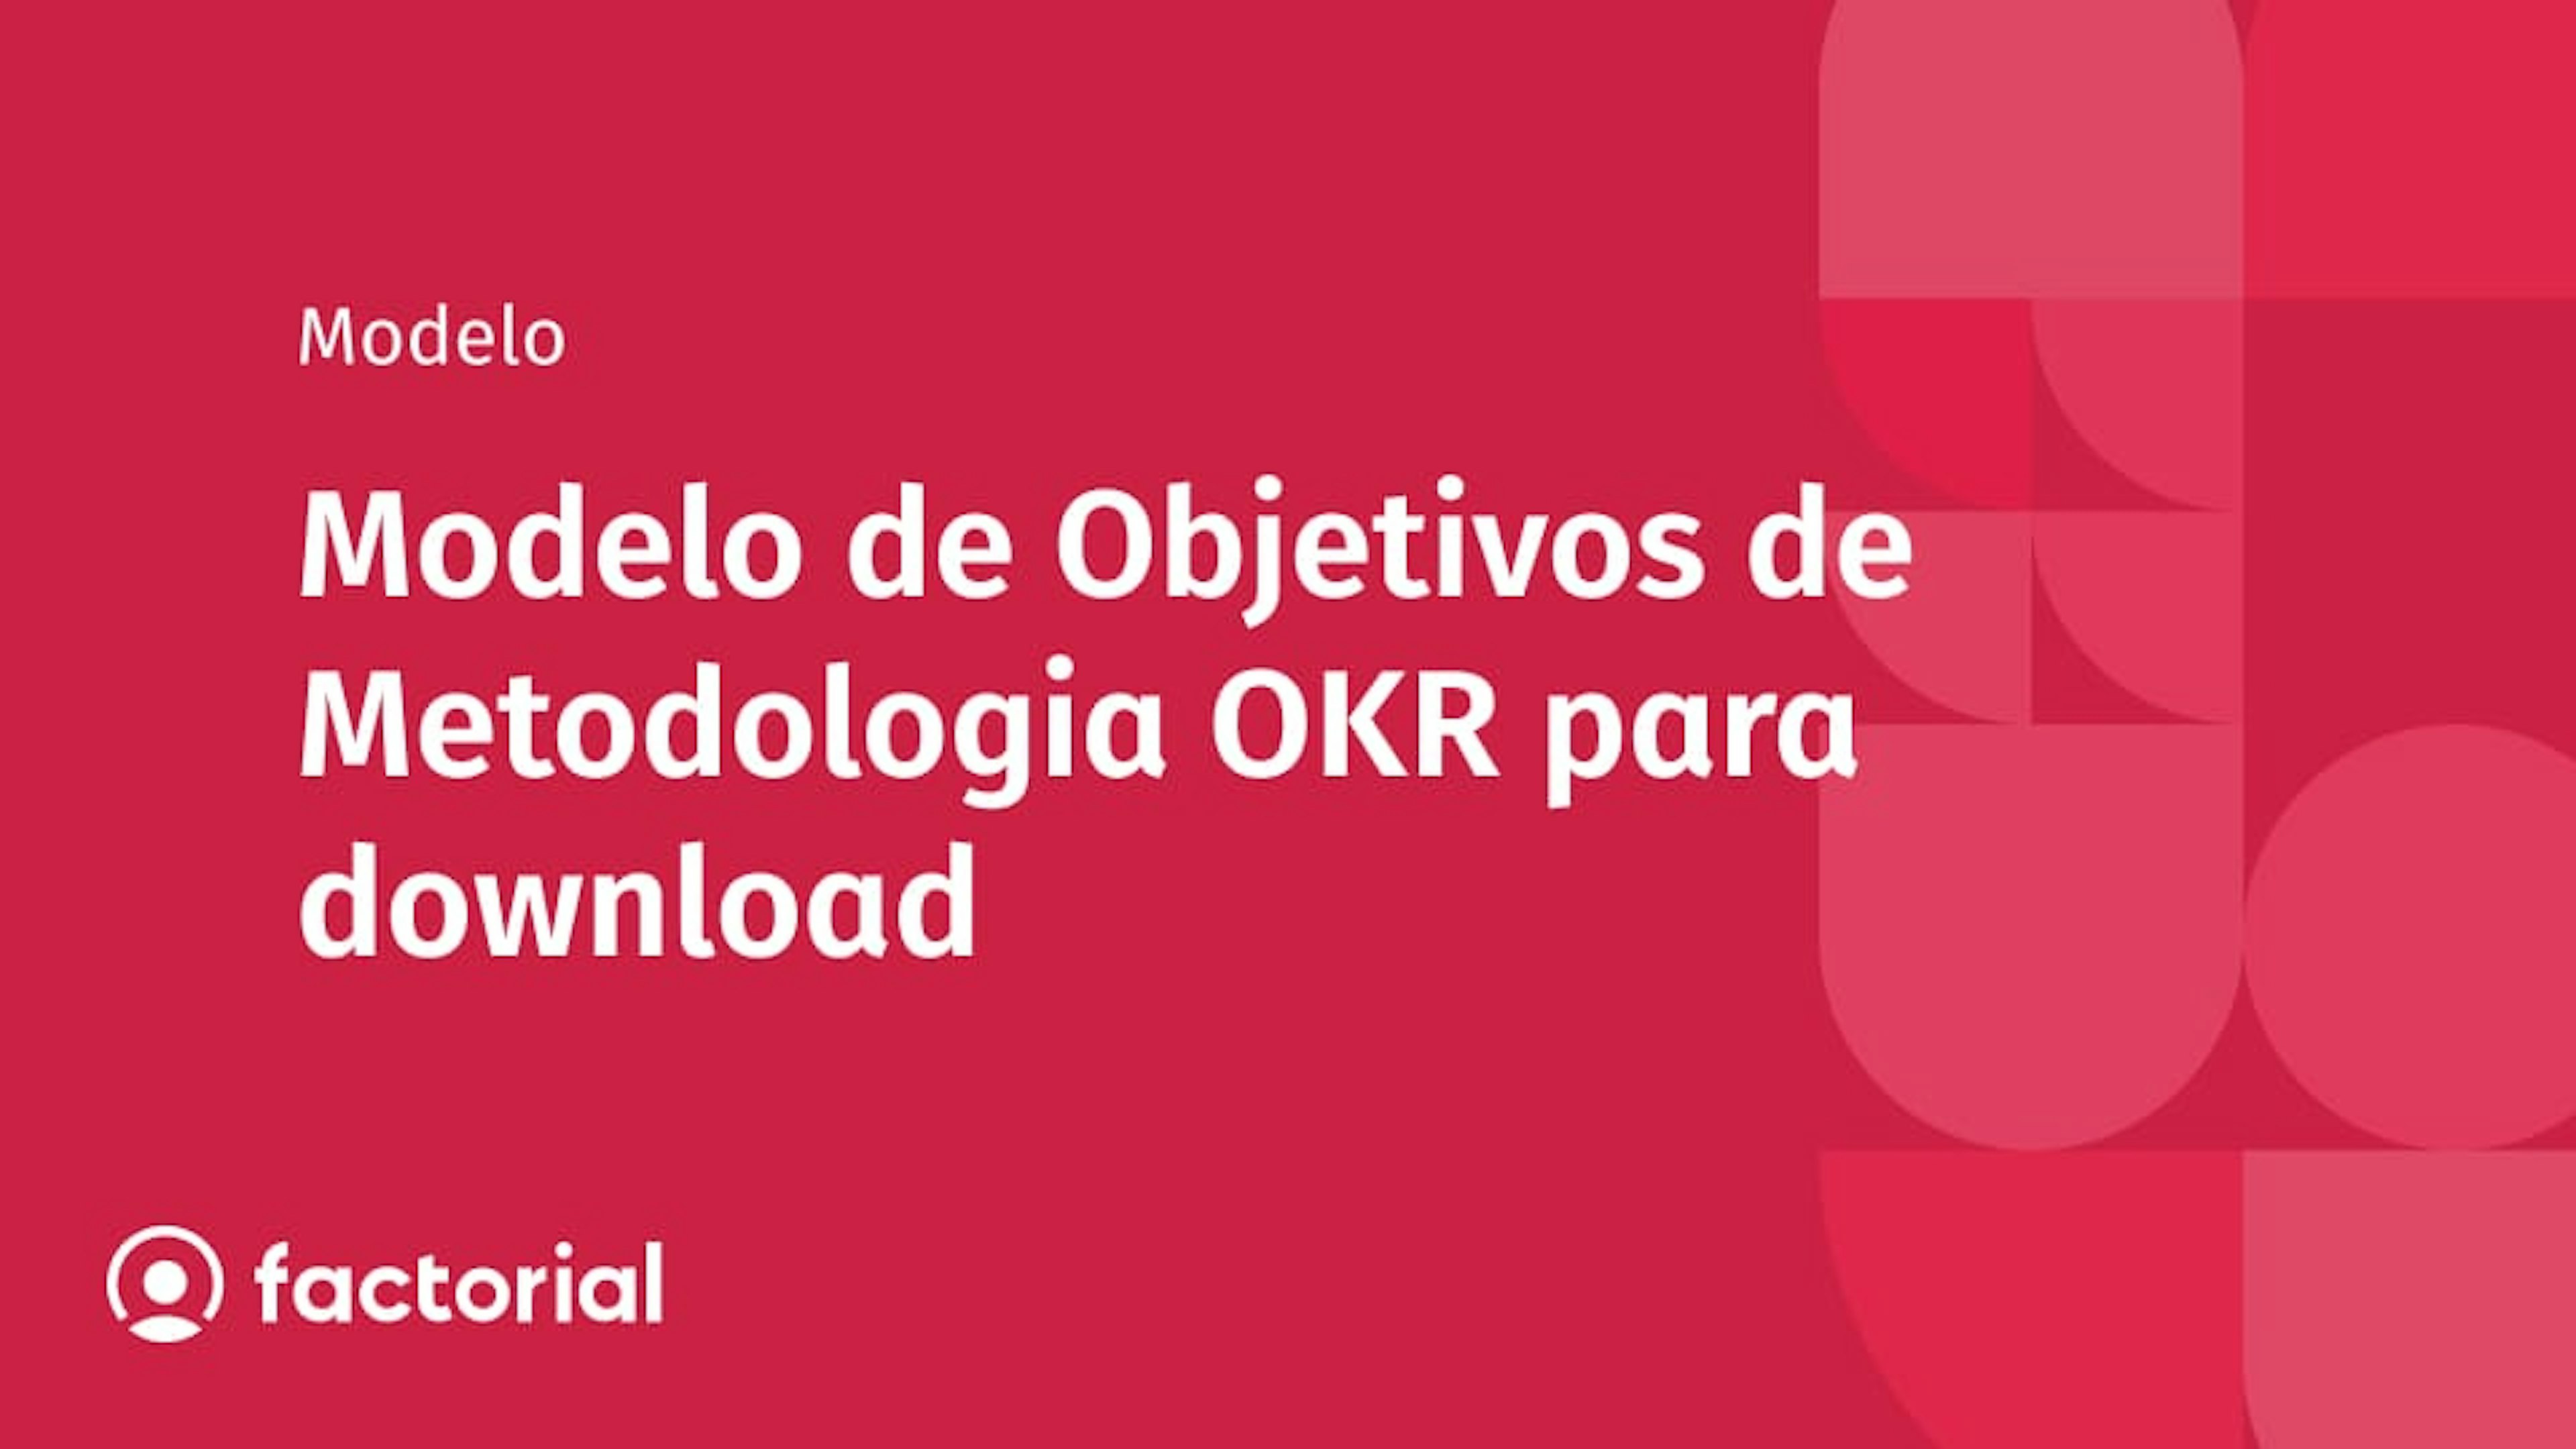 Modelo de Objetivos de Metodologia OKR para download